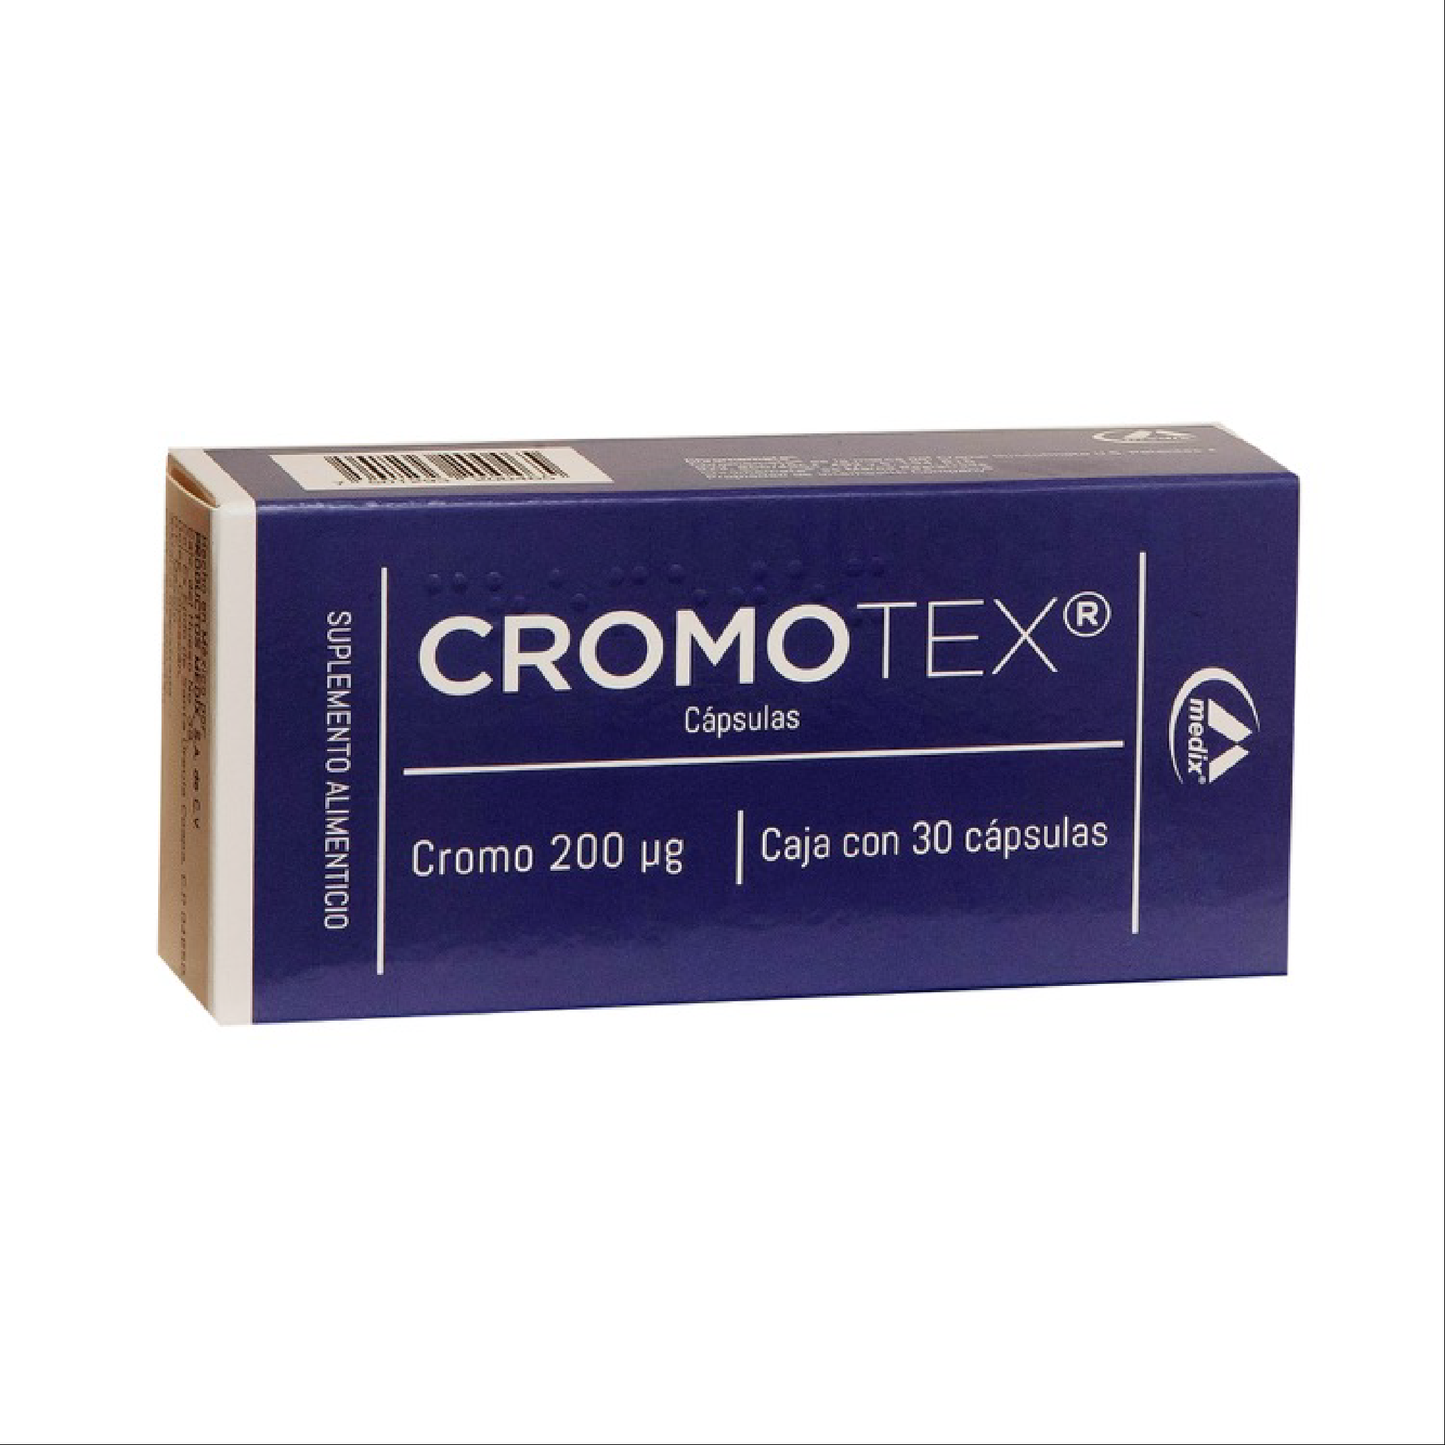 Cromotex (Cromo) Caps 200mcg Cja c 30 caps